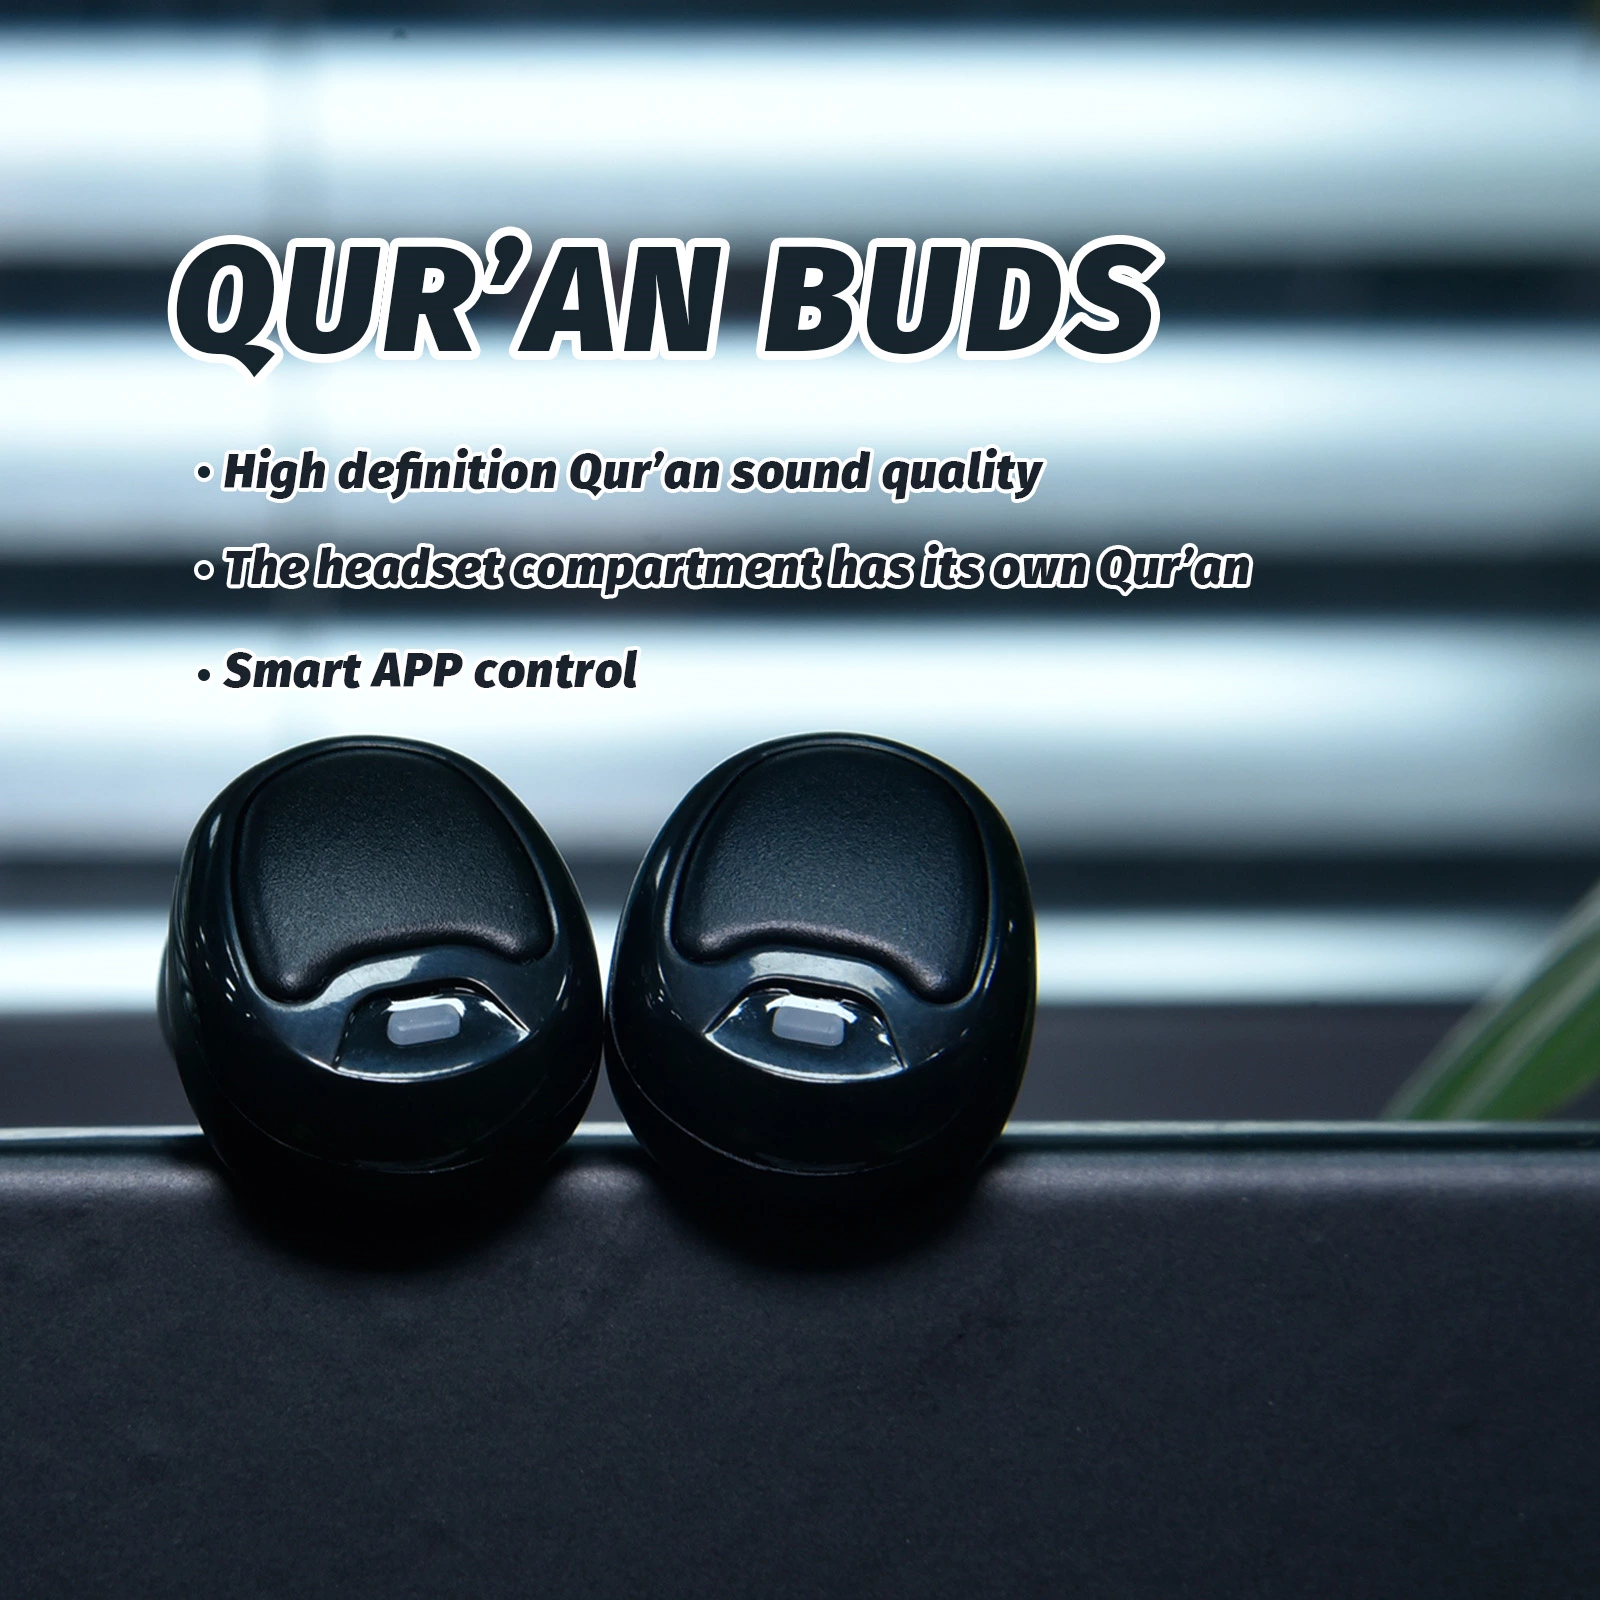 Equantu Quran Buds - Wireless EarBuds with Full Quran,Earphone Quran Speaker Muslim Prayer Learning Quran Surah Arabic Quran Player,New Quran pods Quran buddy